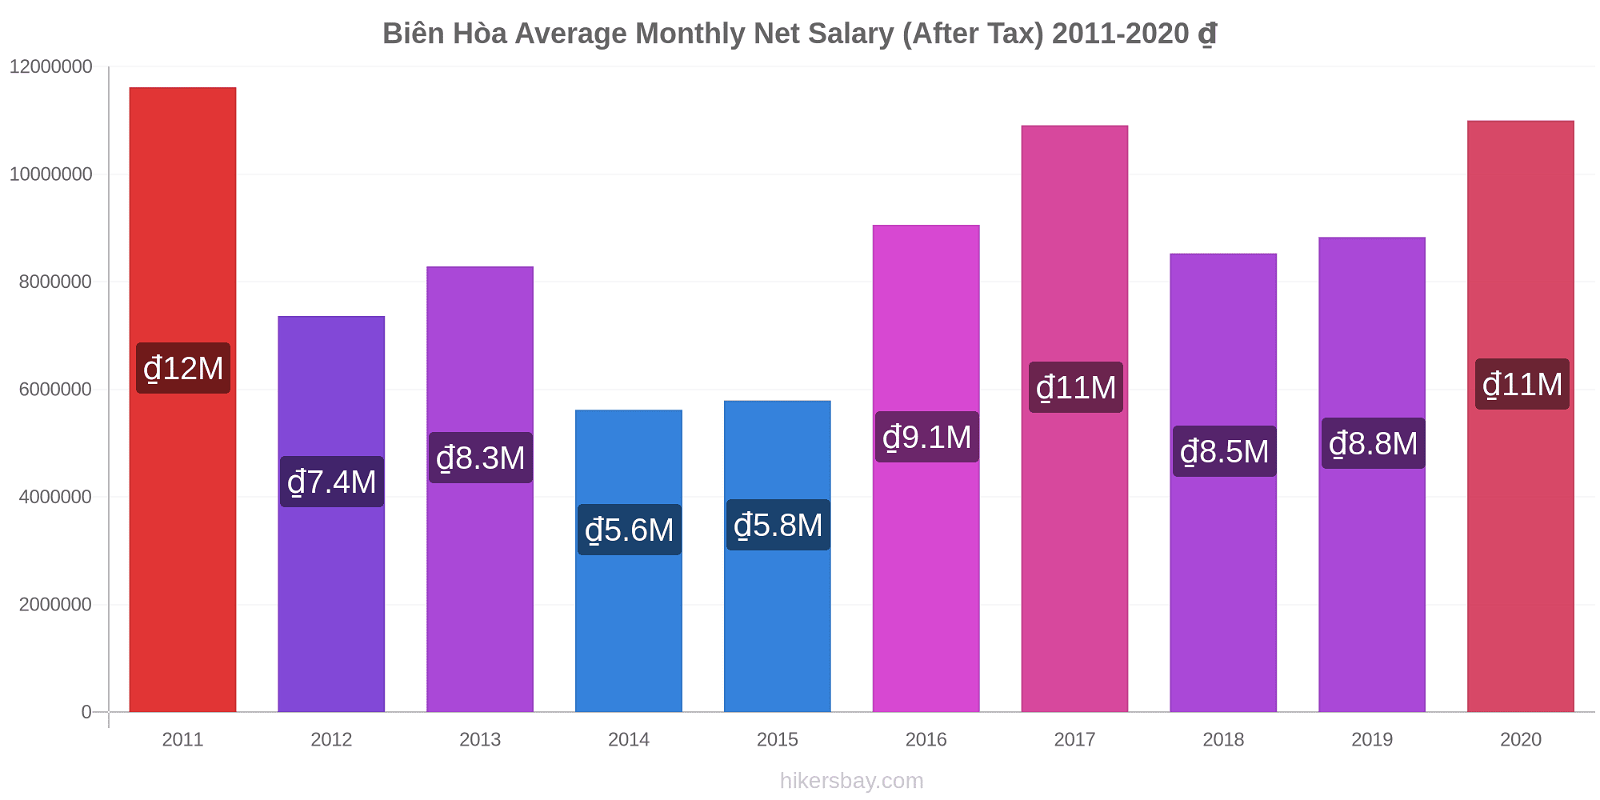 Biên Hòa price changes Average Monthly Net Salary (After Tax) hikersbay.com